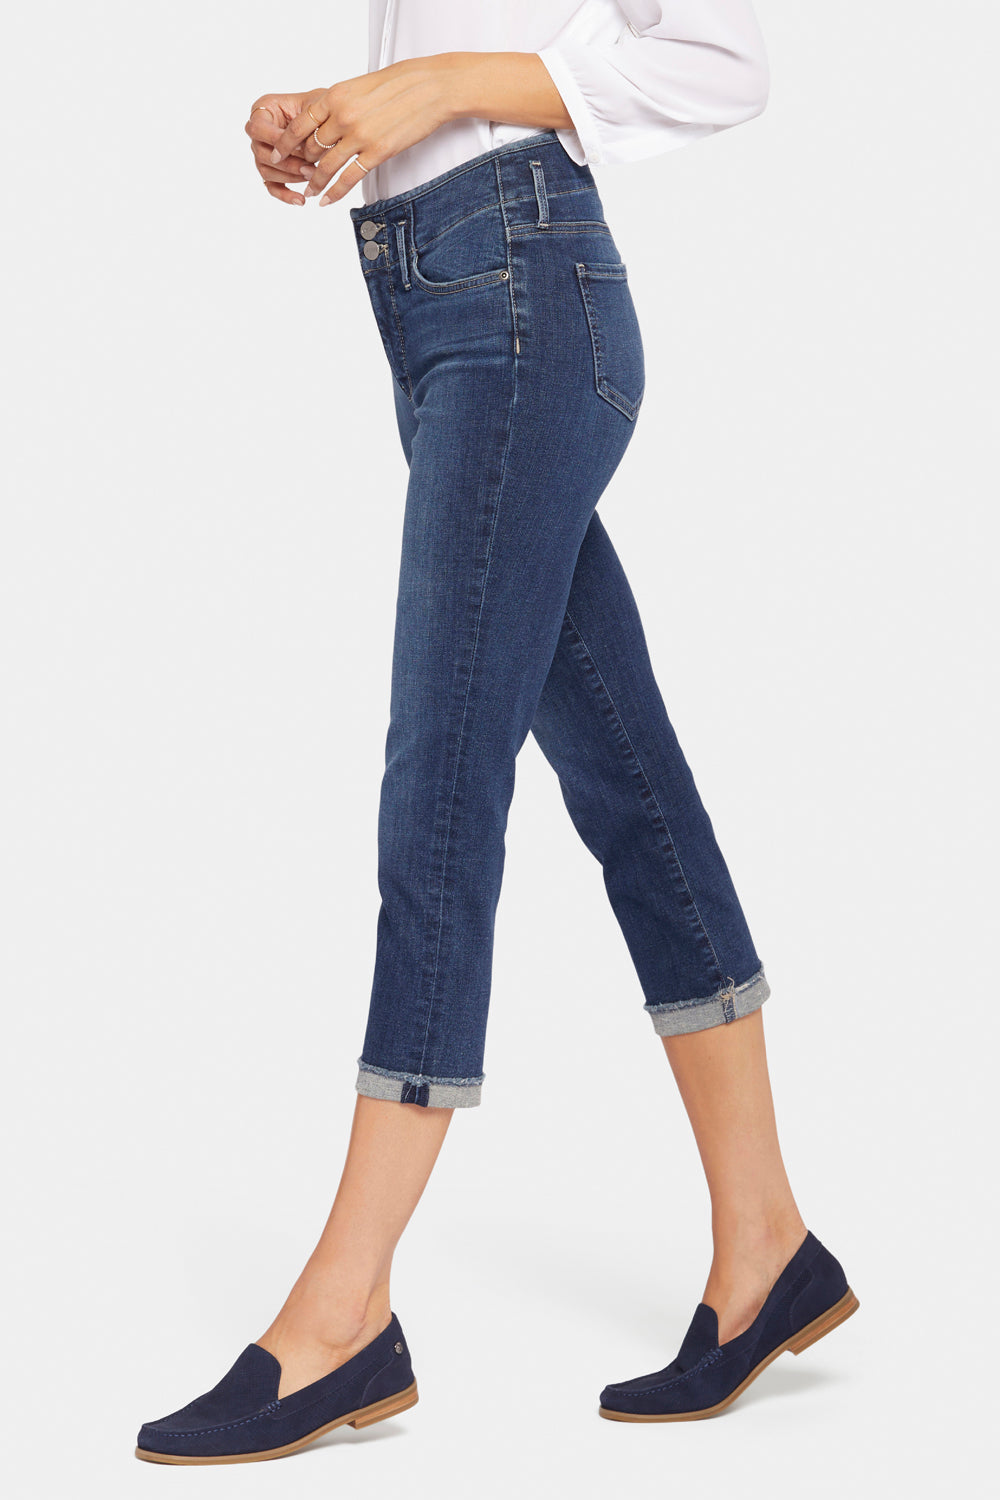 Chloe Capri Jeans